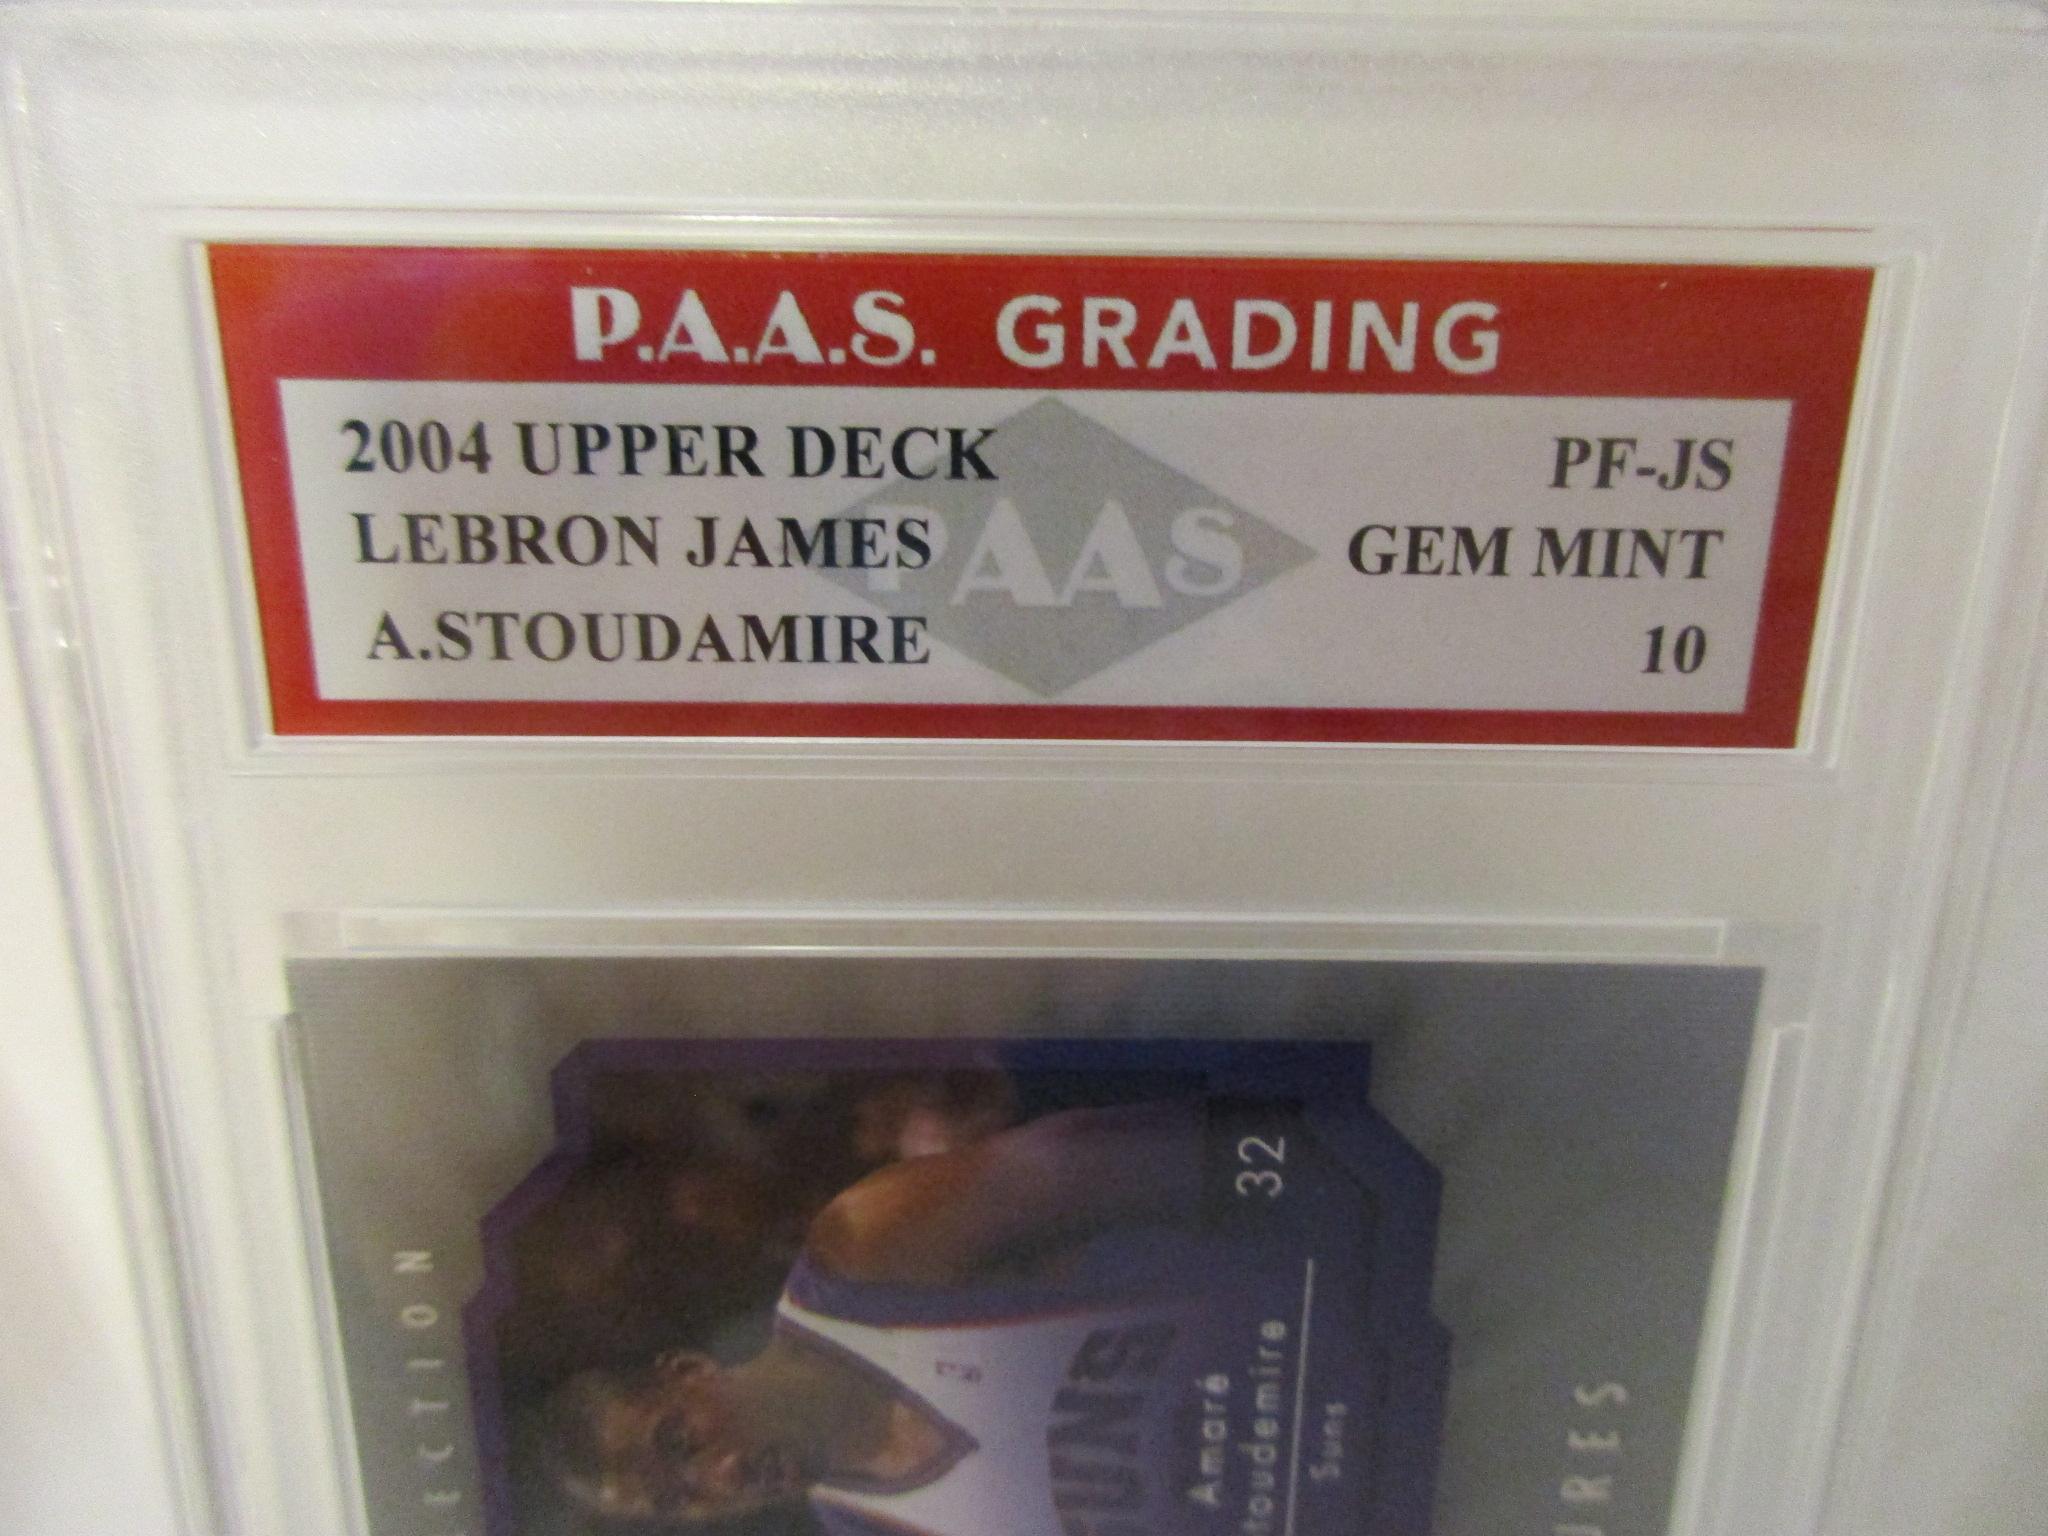 LeBron James Amare Stoudamire 2004 Upper Deck #PF-JS graded PAAS Gem Mint 10